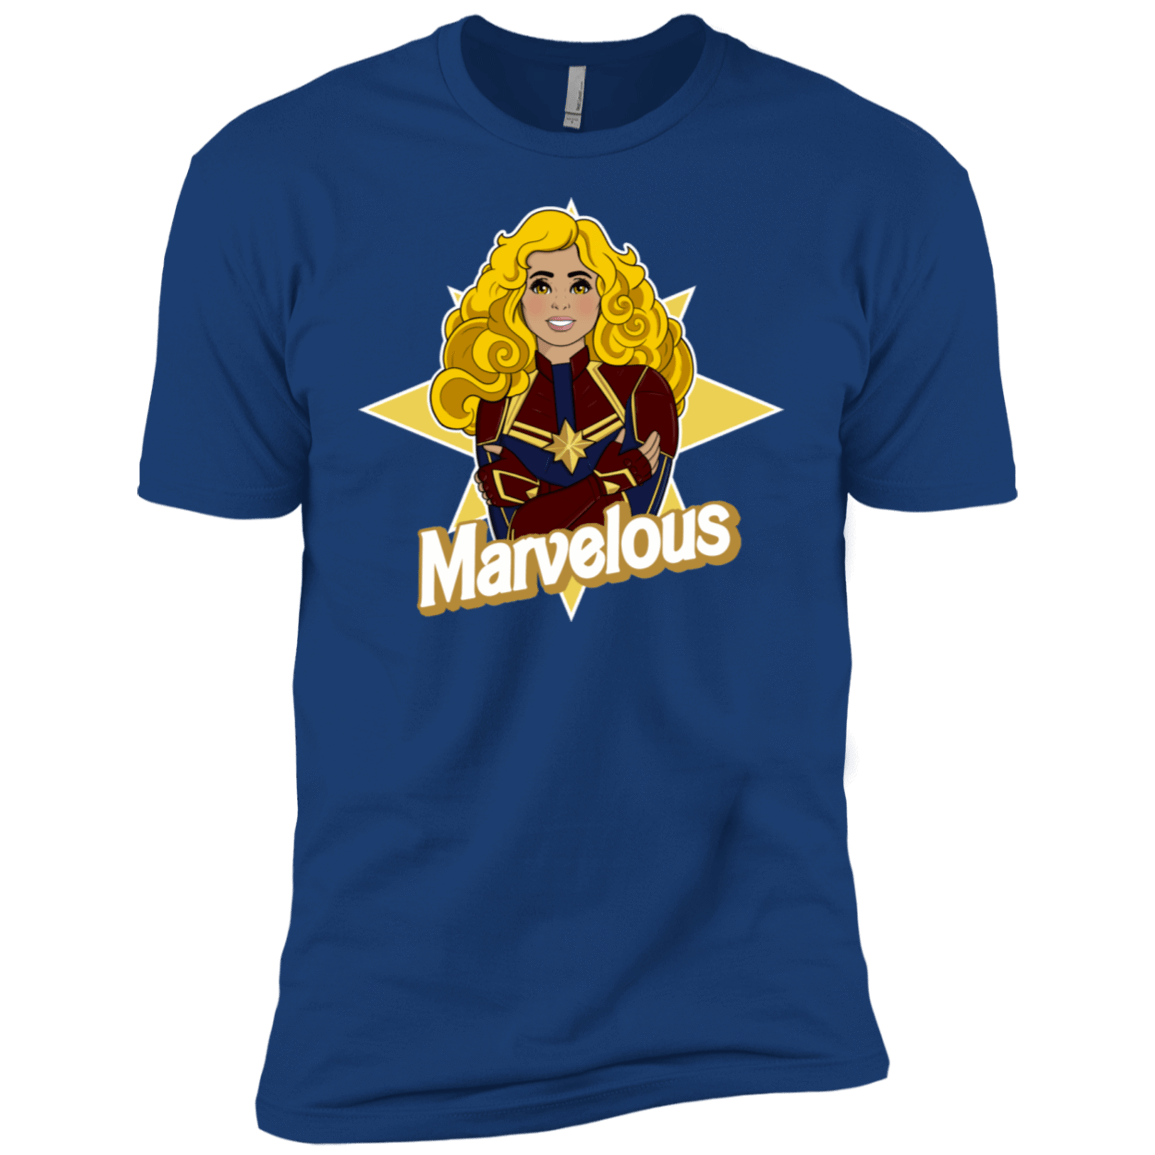 T-Shirts Royal / X-Small Marvelous Men's Premium T-Shirt